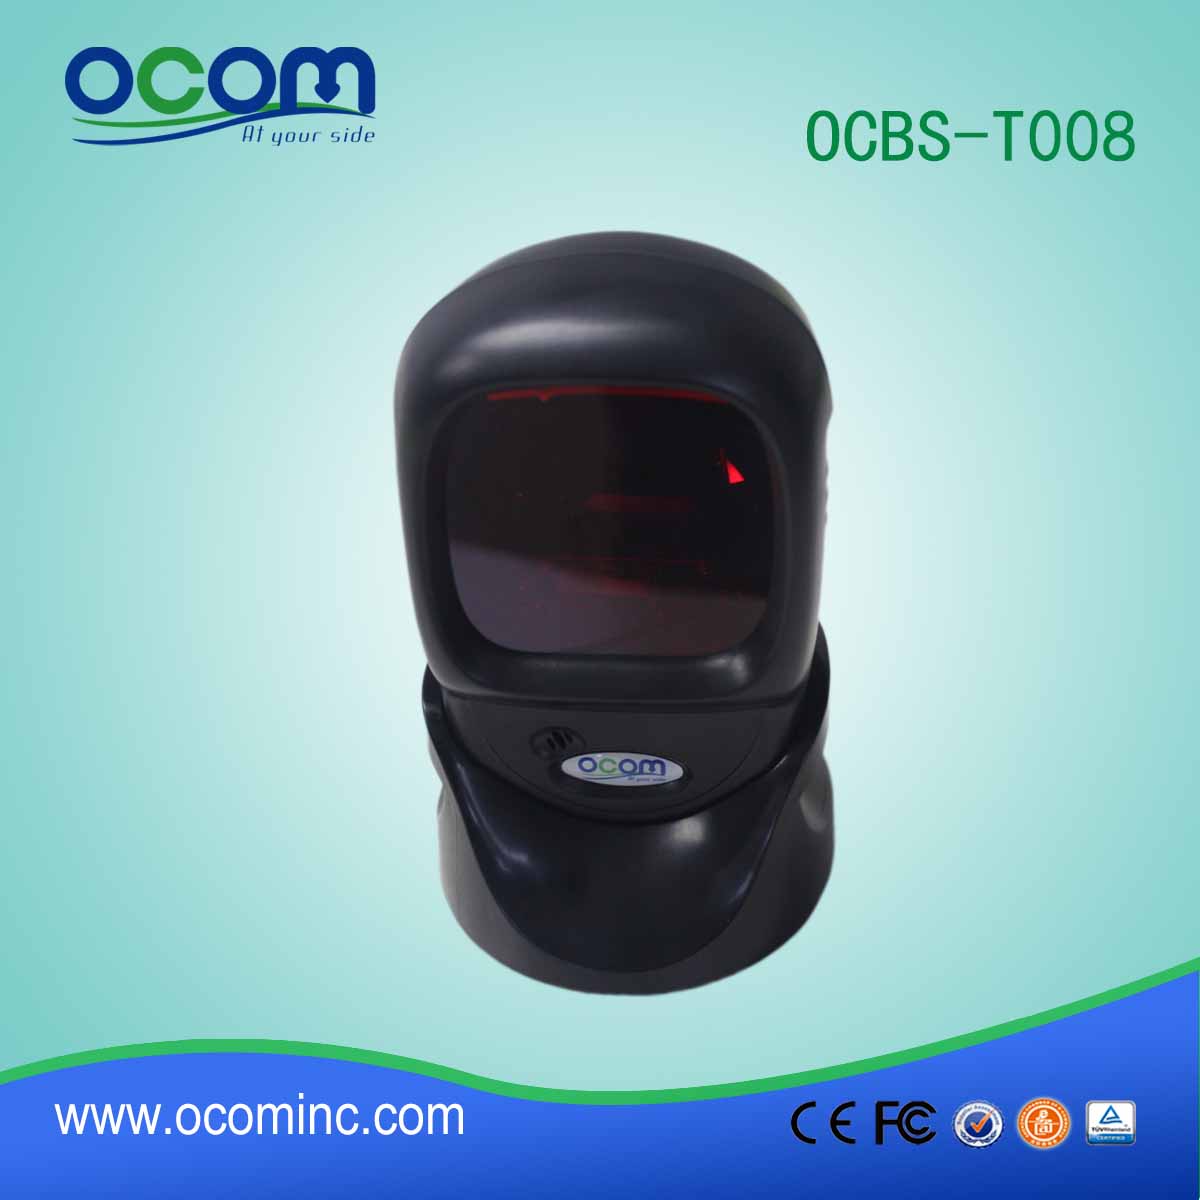 Scanner Etiqueta OCBs-T008 desktop Relief Laser de caixa do supermercado